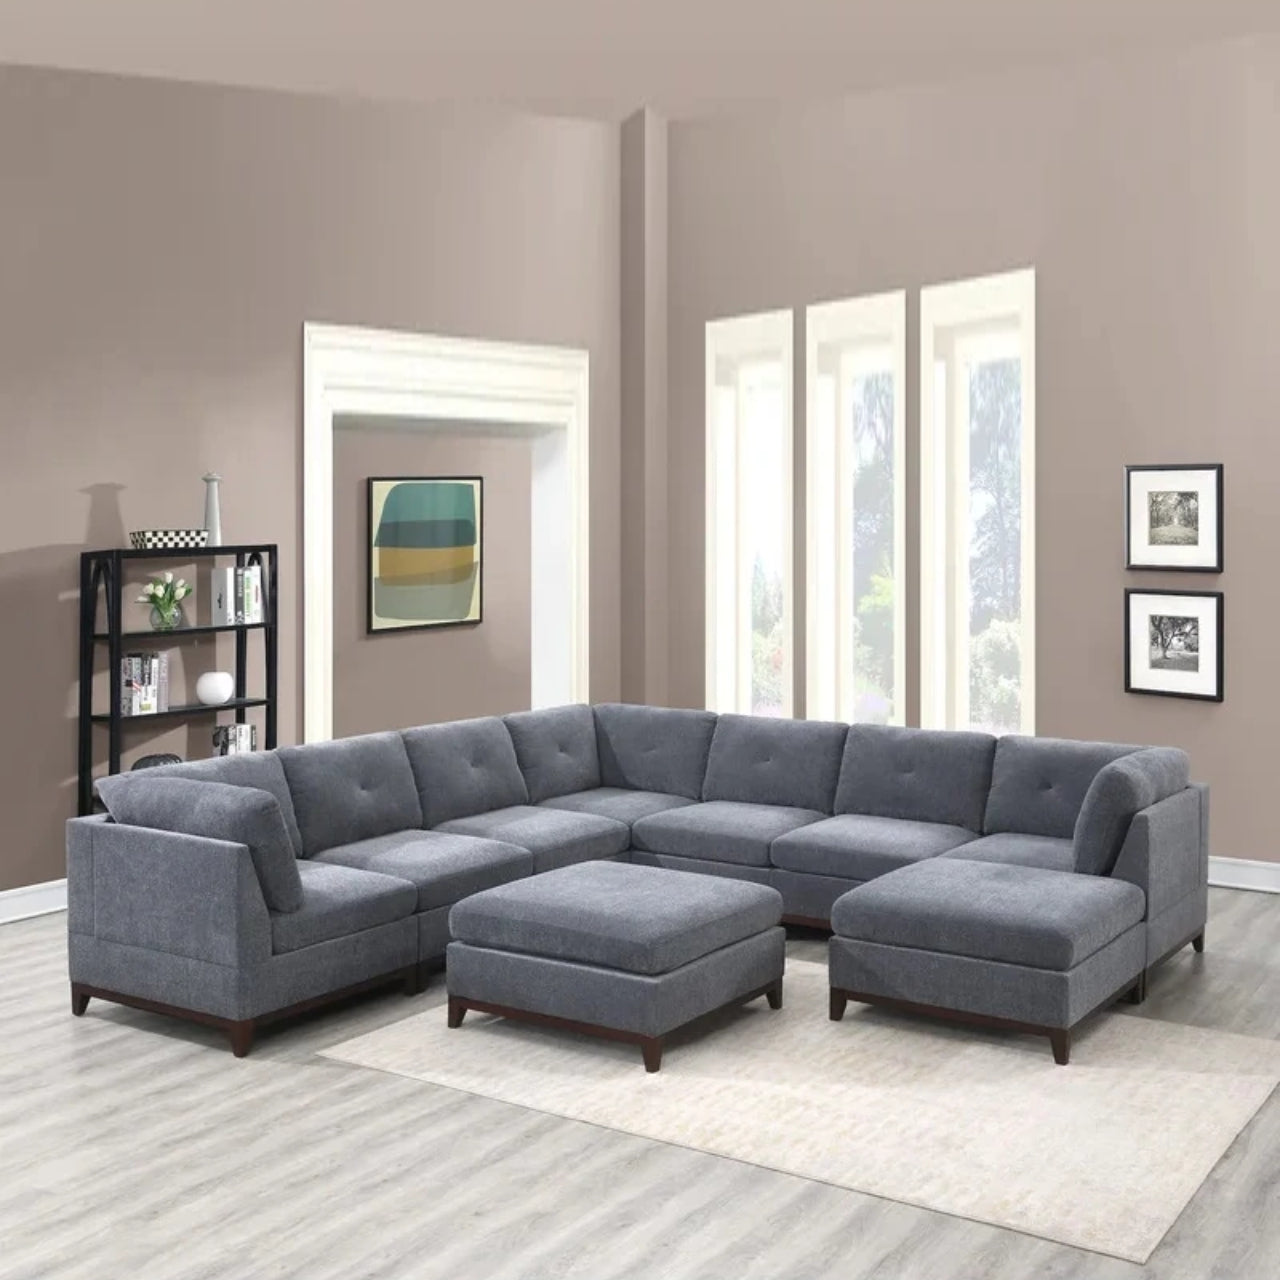 7 Seater Sofa Set: Corner Sectional Sofa Set – Gkw Retail